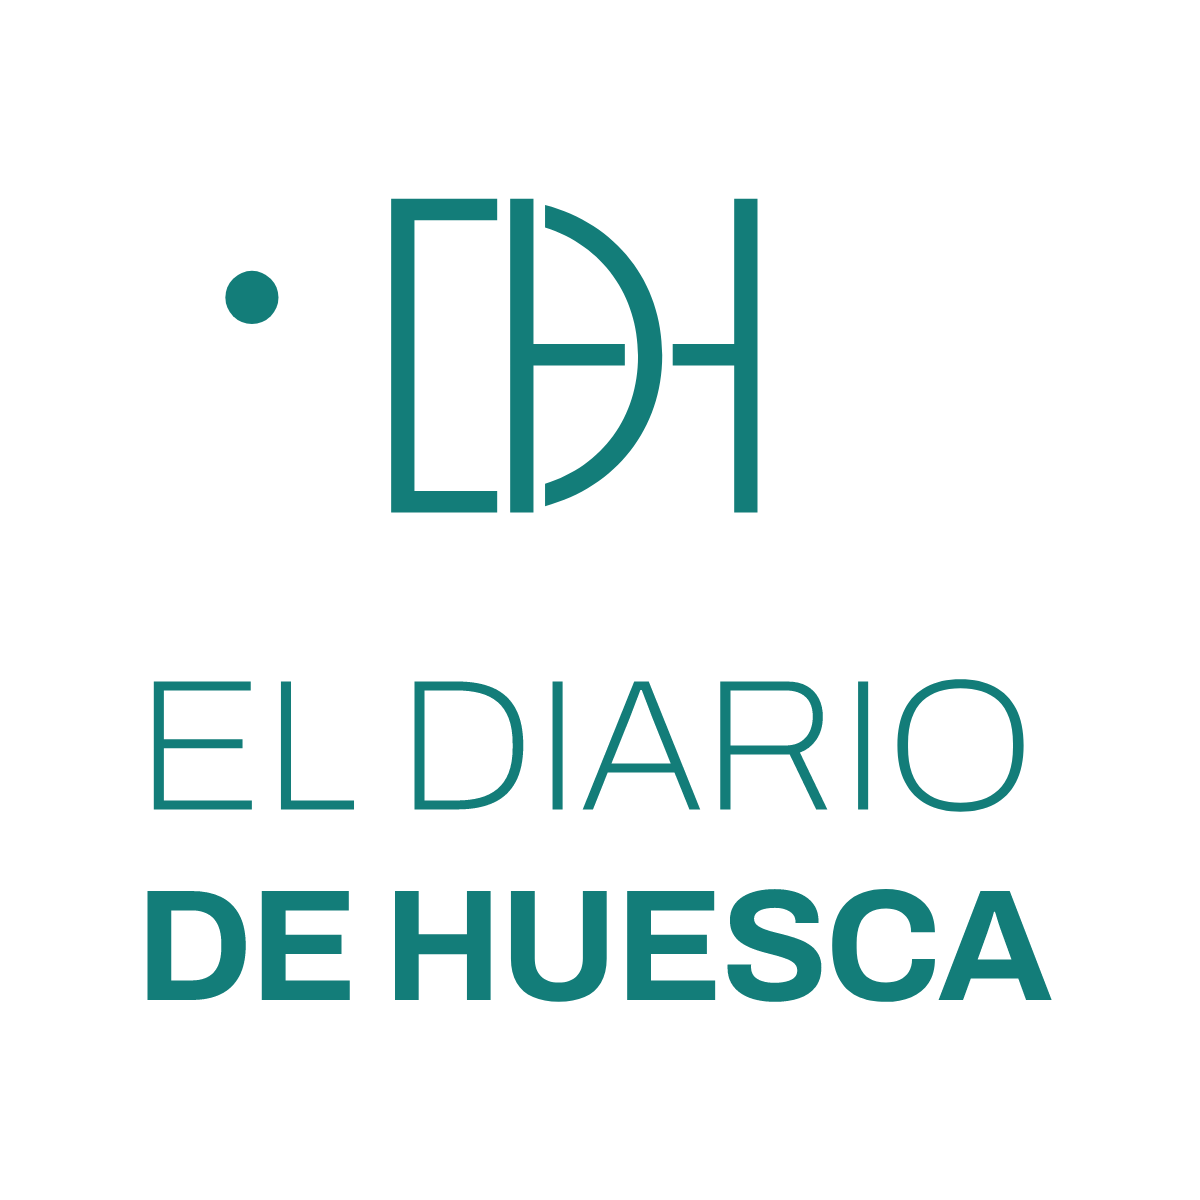 www.eldiariodehuesca.com